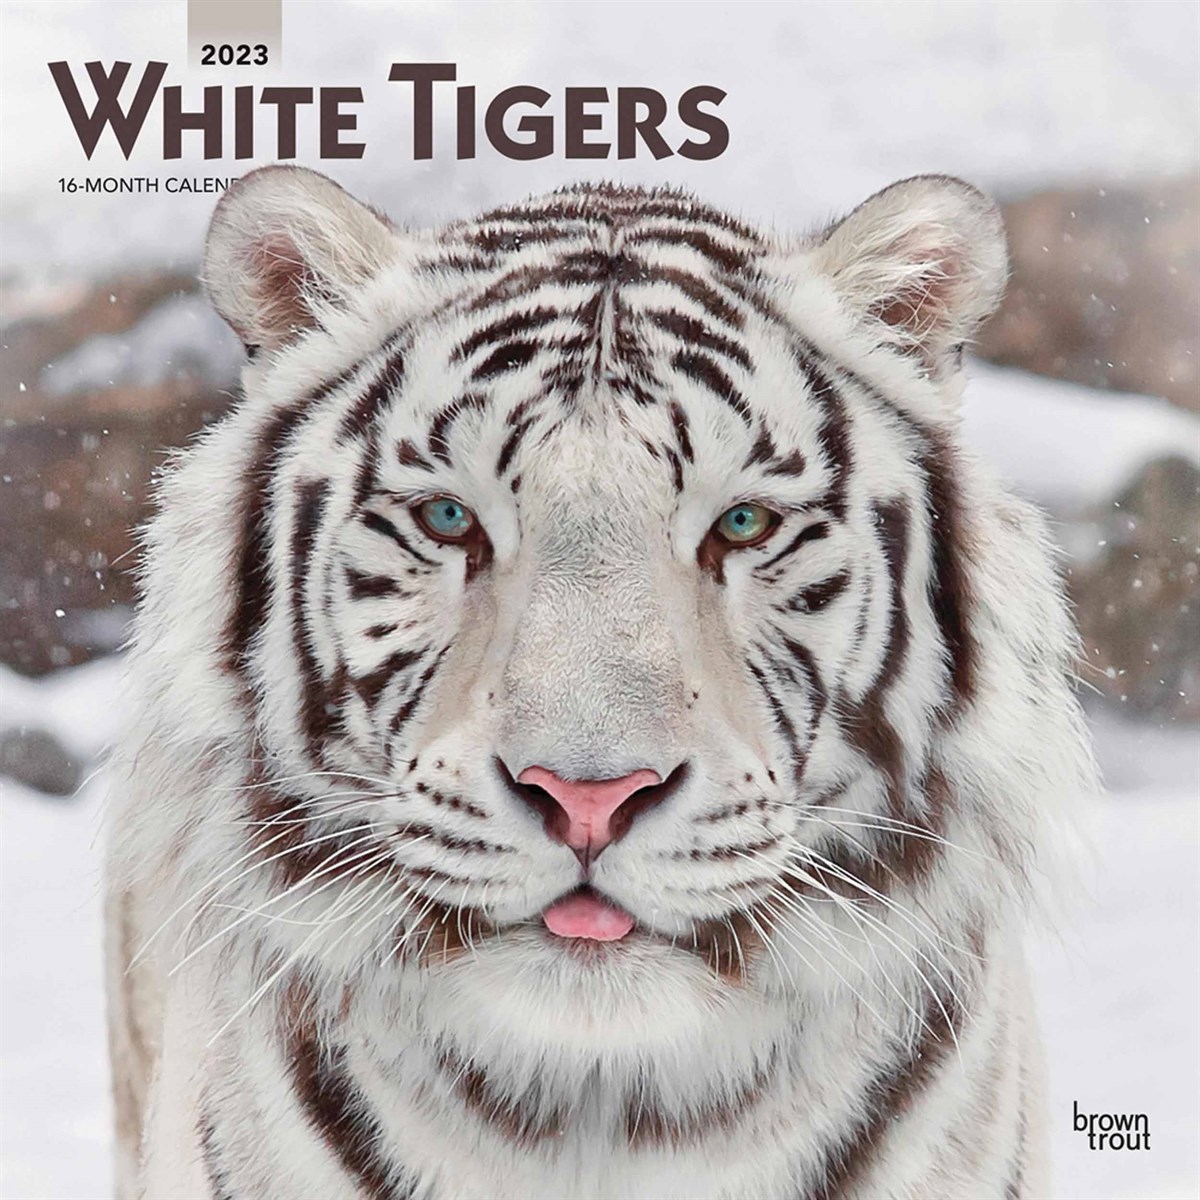 White Tigers 2023 Calendars